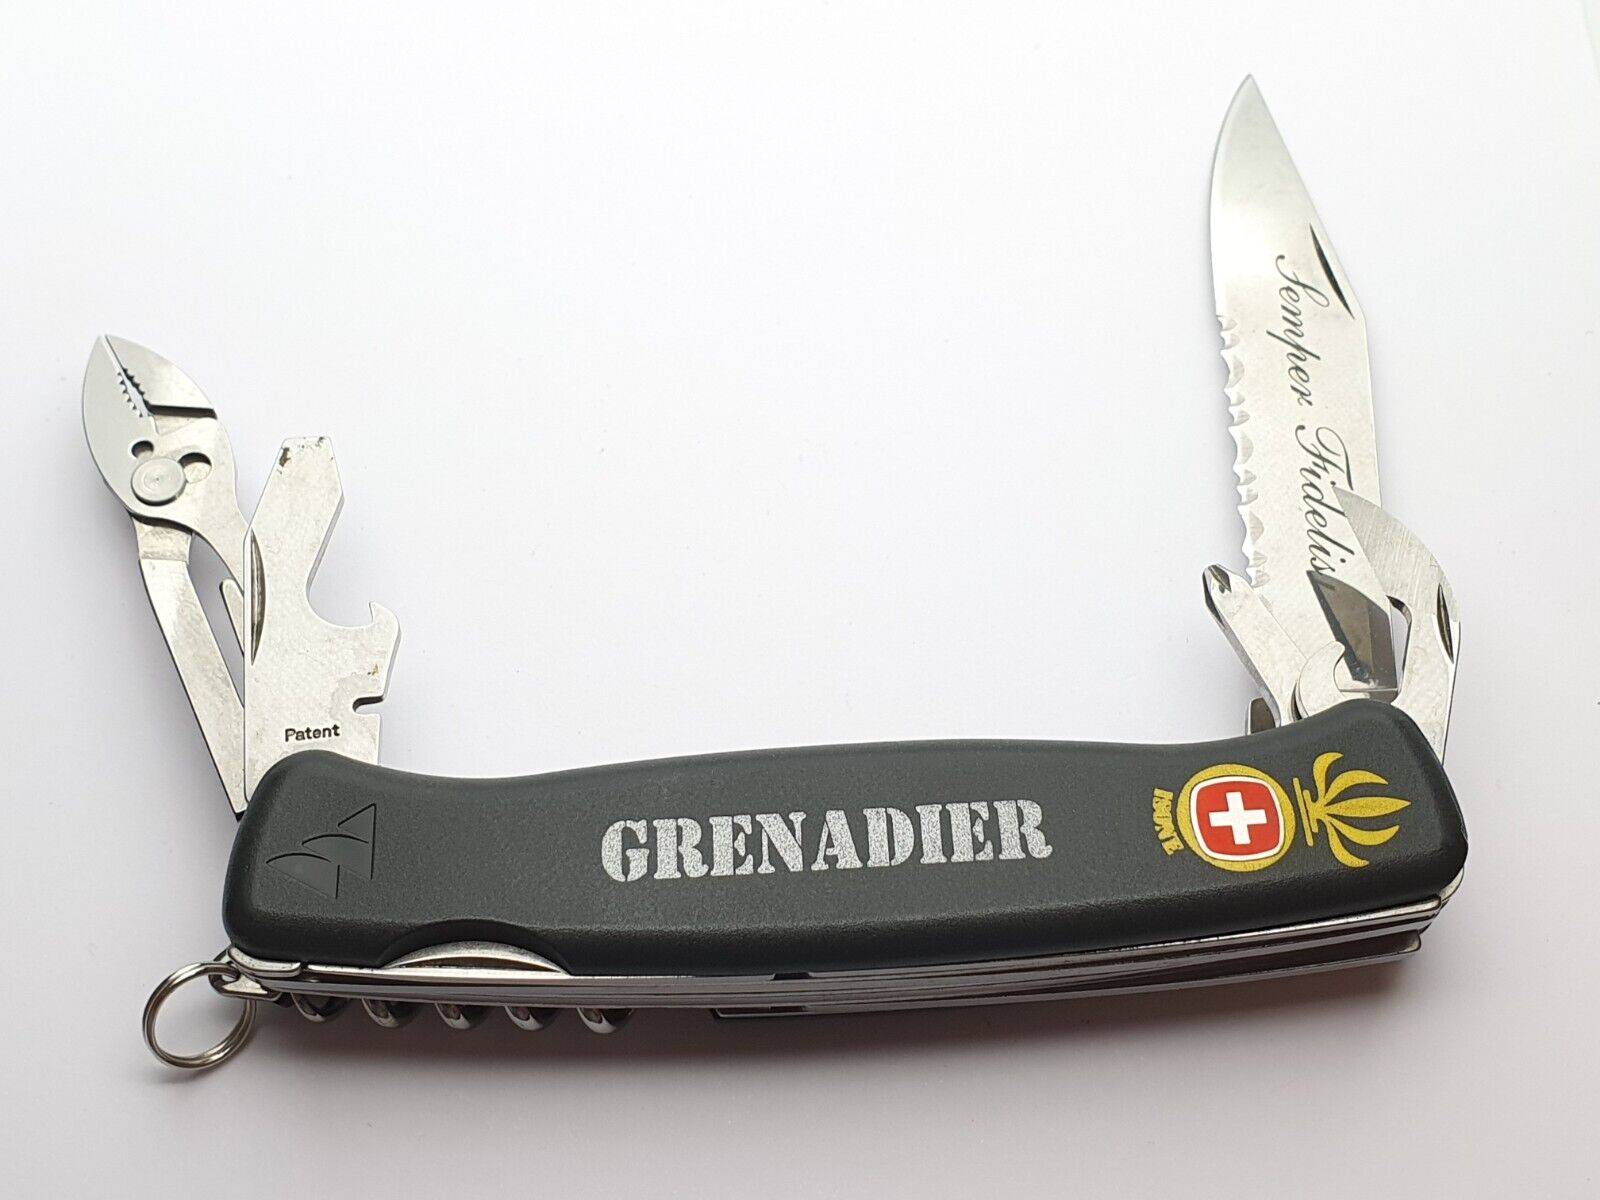 Wenger Semper Fidelis Grenadier Military Army Knife